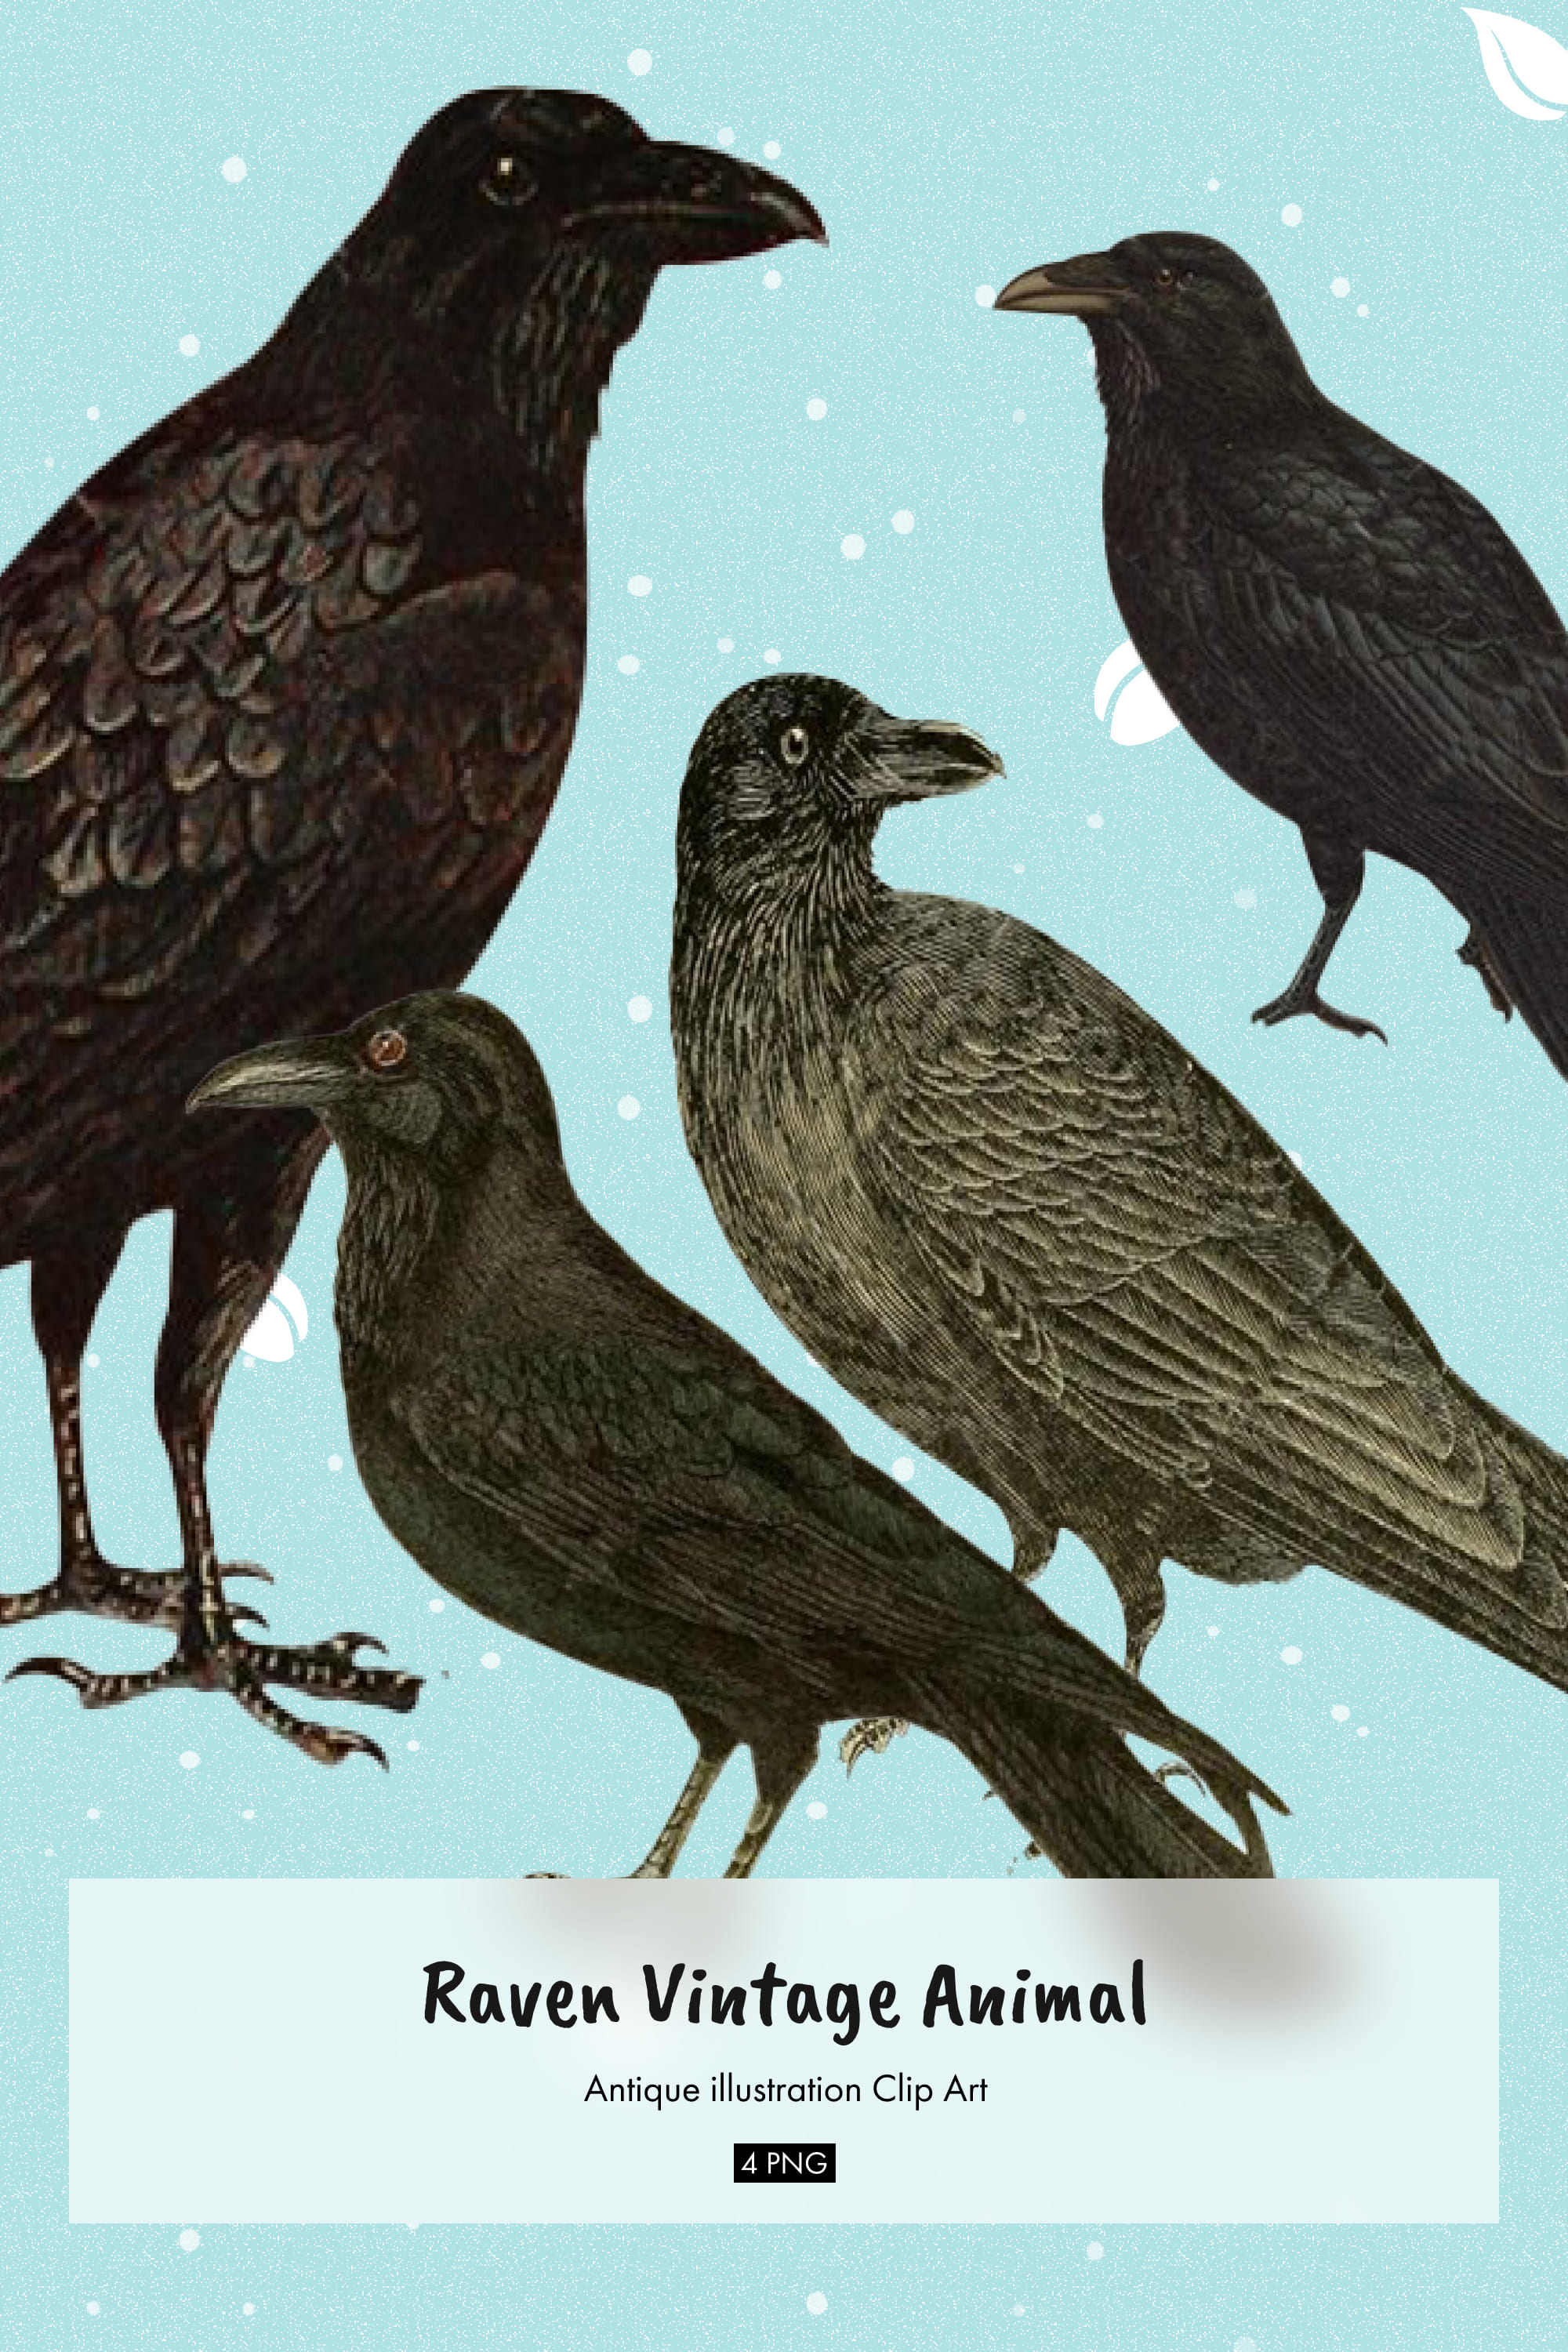 Raven vintage animal illustration clip art - pinterest image preview.